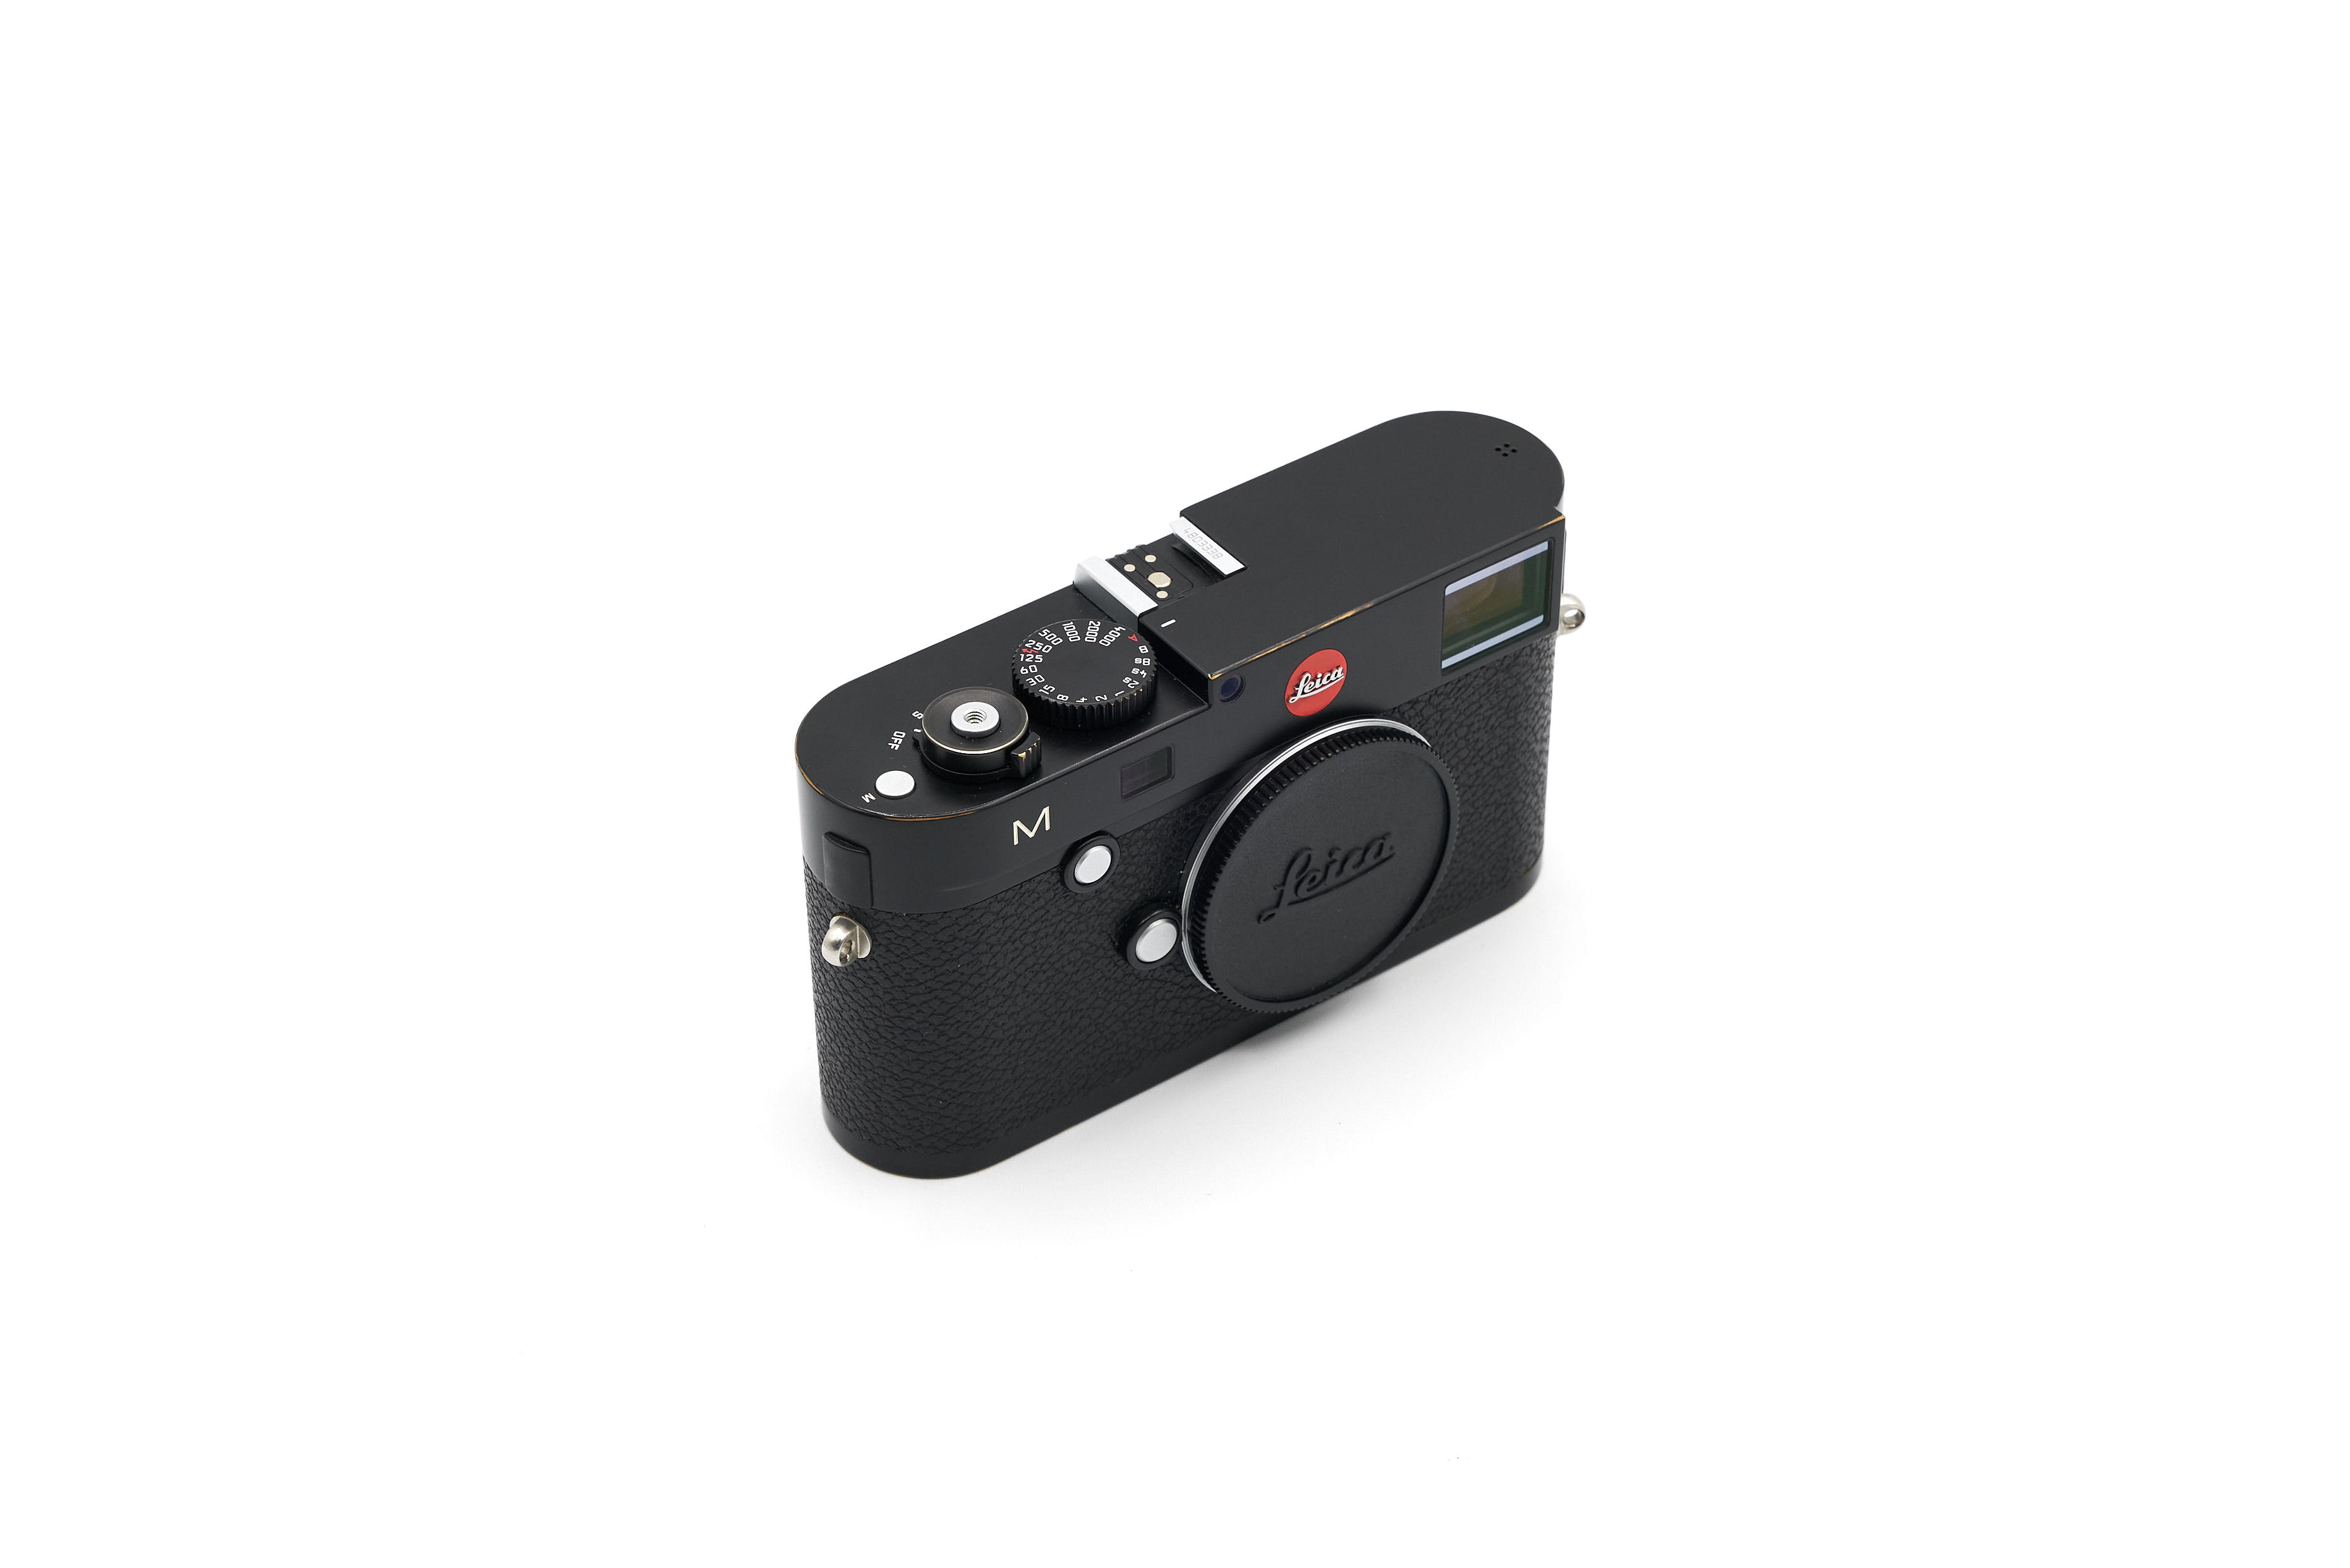 Leica M (Typ 240) 10770